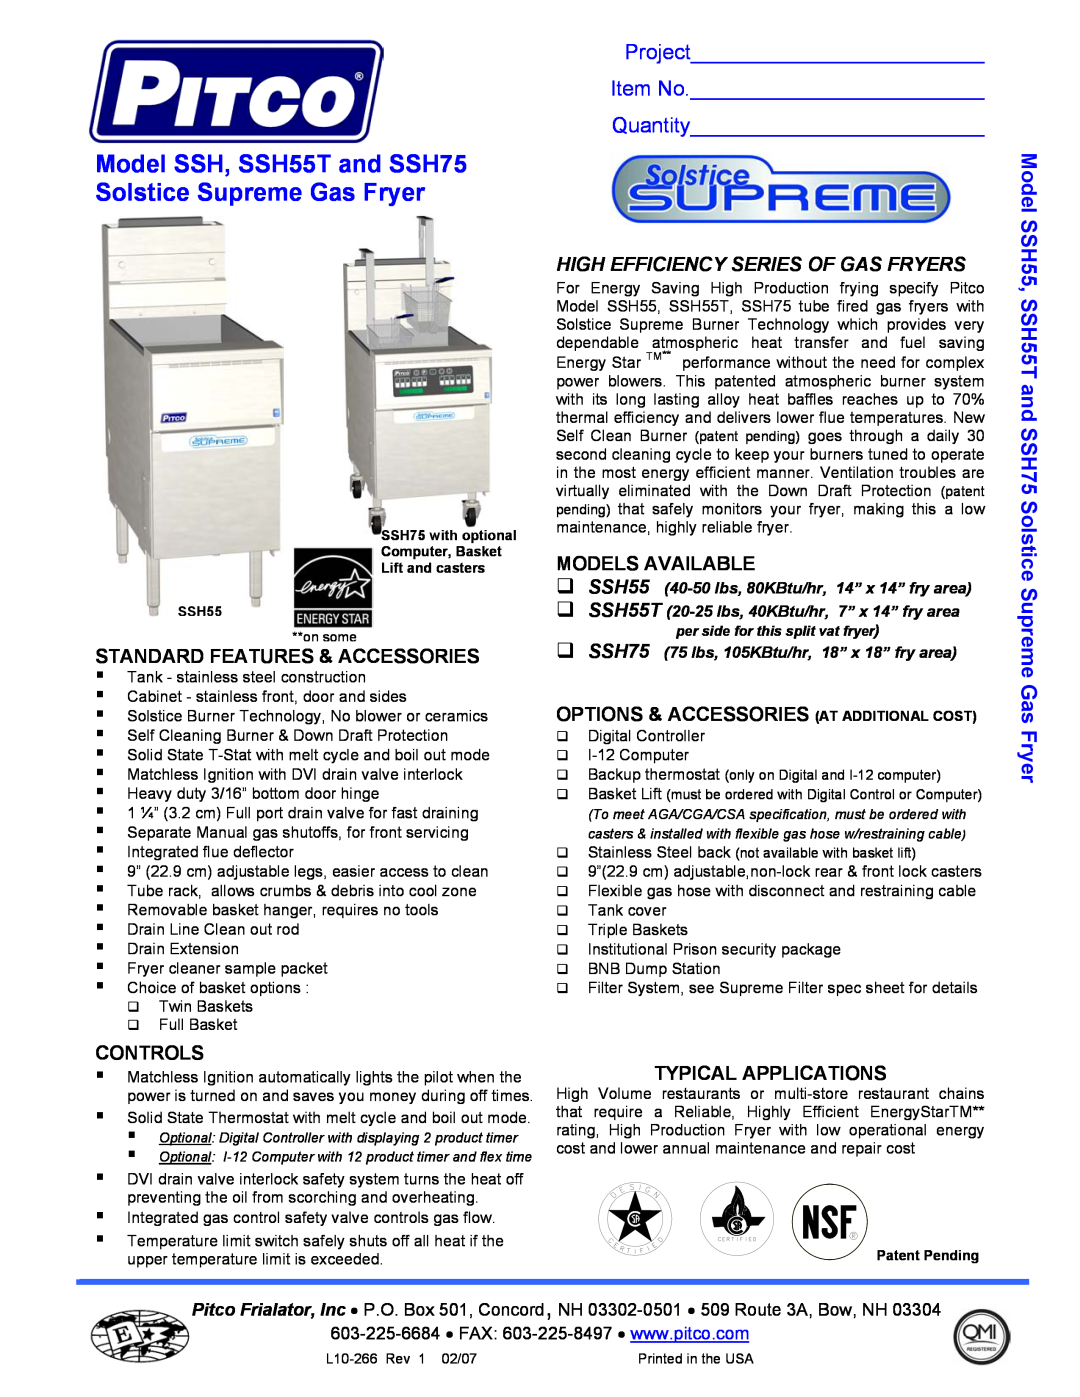 Pitco Frialator manual Model, SSH55, SSH55T and SSH75 Solstice Supreme Gas Fryer, Project Item No Quantity, Controls 